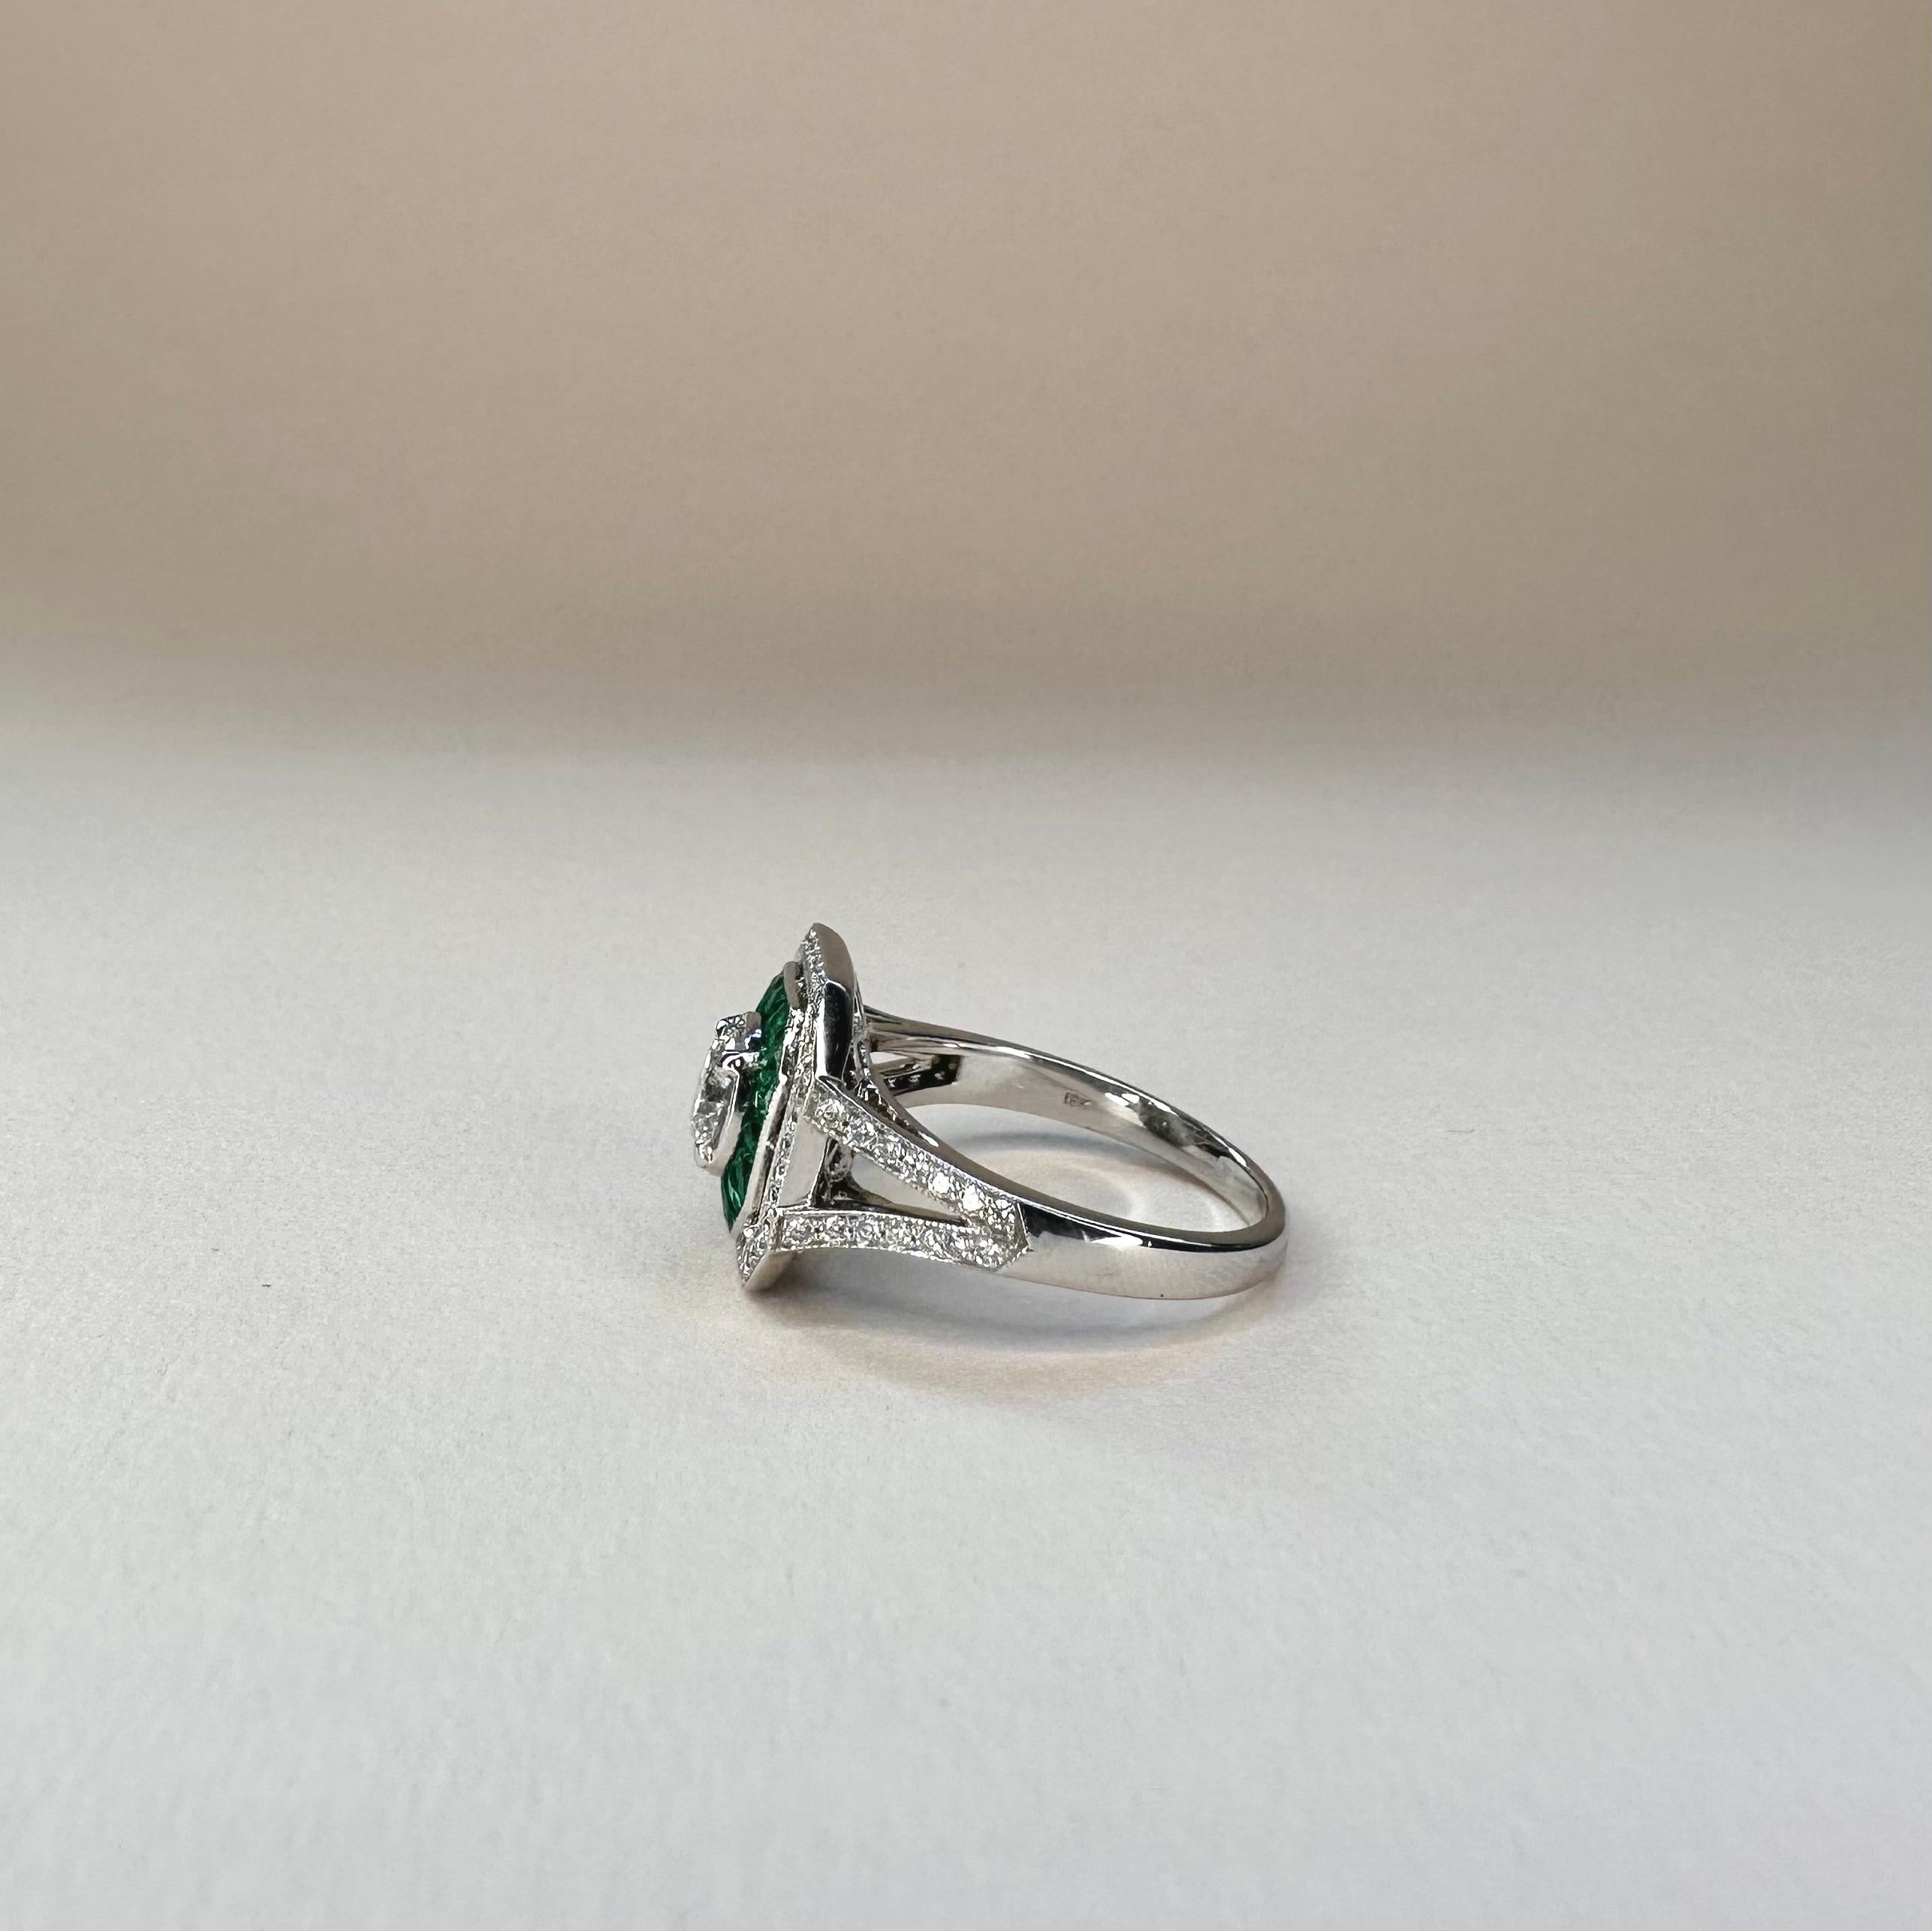 For Sale:  Platinum 0.30 Ct Vivid Green Calibre Cut Emerald with center 0.4 Ct Diamond Ring 7